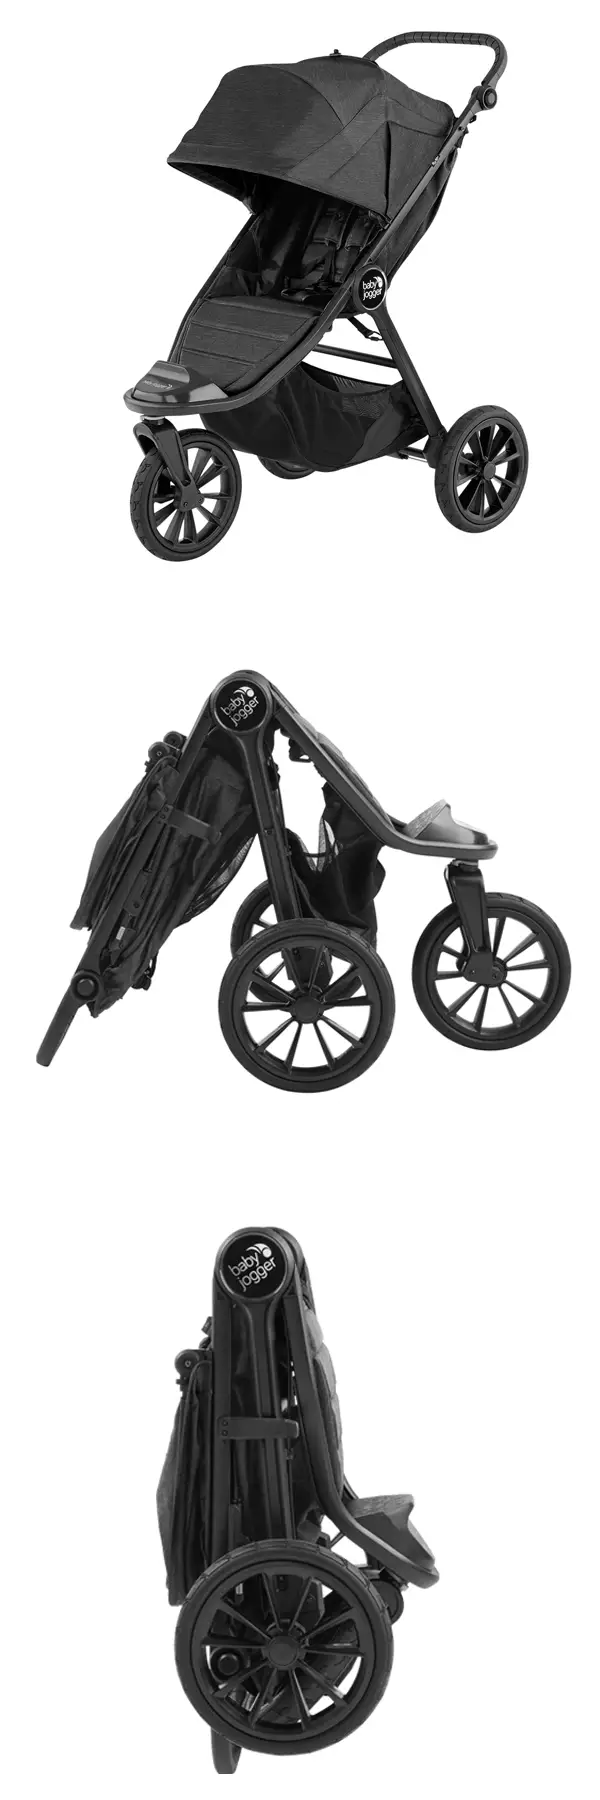 Baby Jogger City Elite 2 stroller configurations